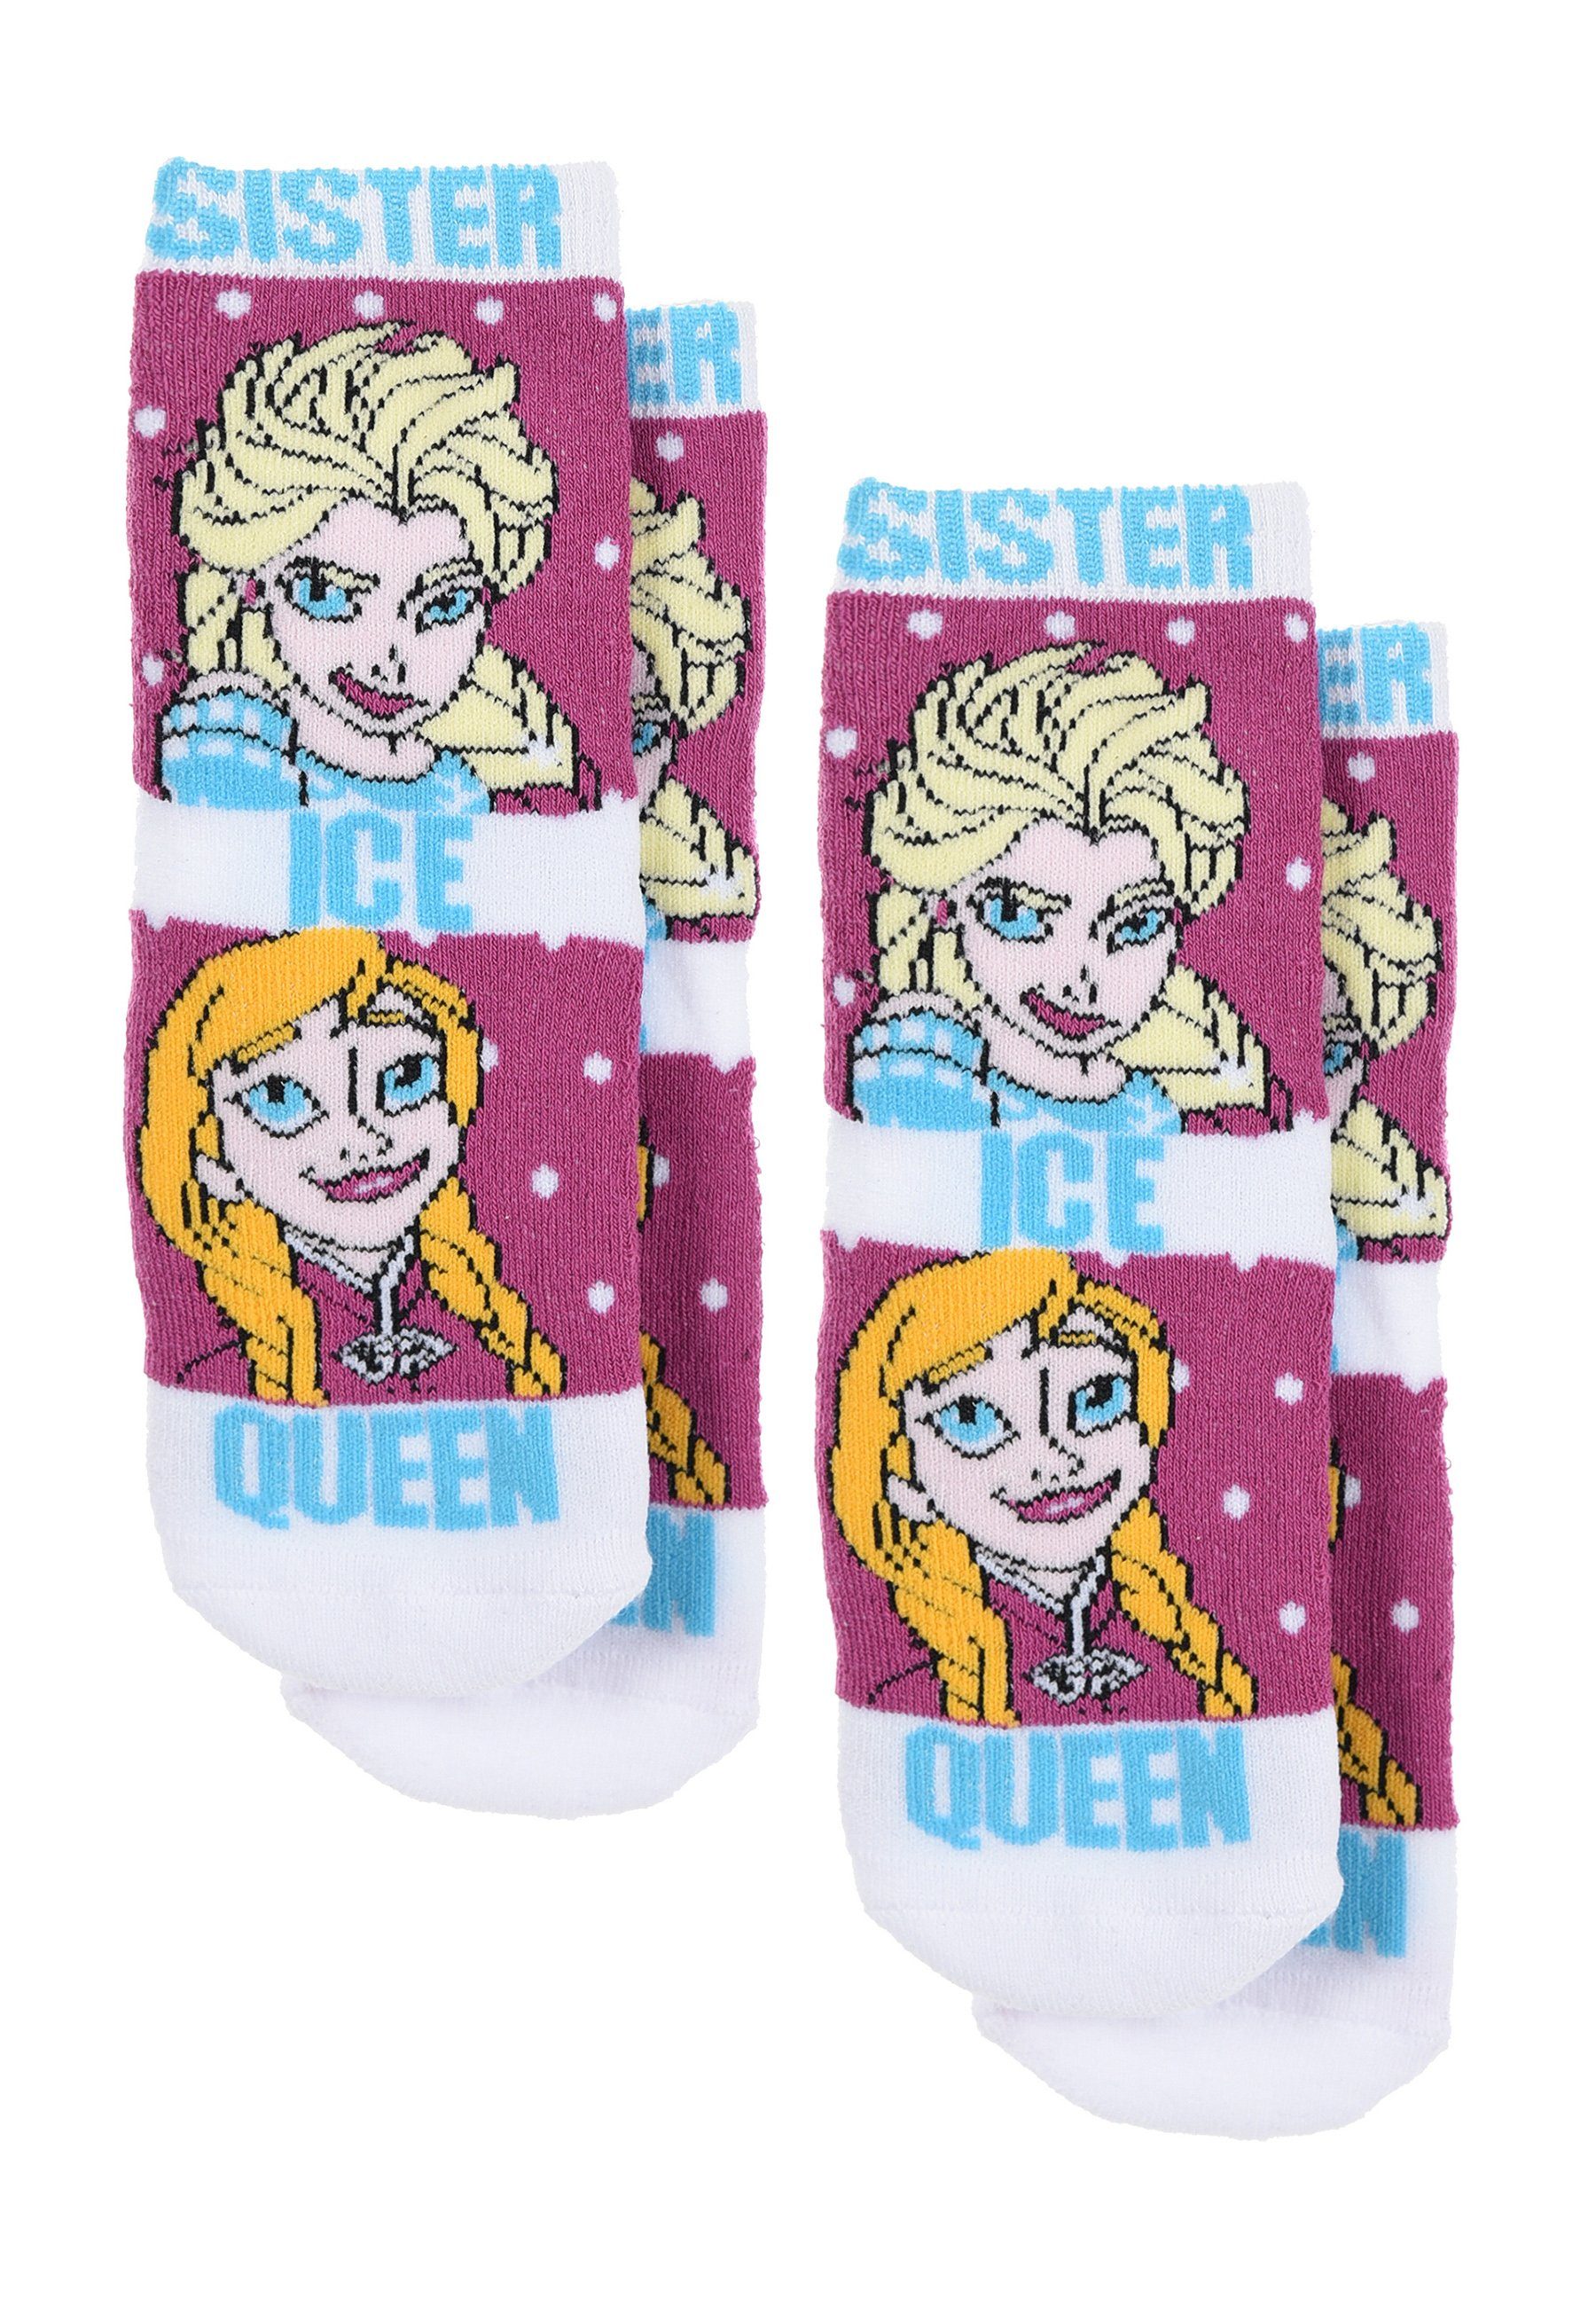 Disney anti-rutsch Noppen Socken mit 2 Kinder Mädchen Paar Gumminoppen Strümpfe Eiskönigin Frozen (2-Paar) Stopper-Socken ABS-Socken